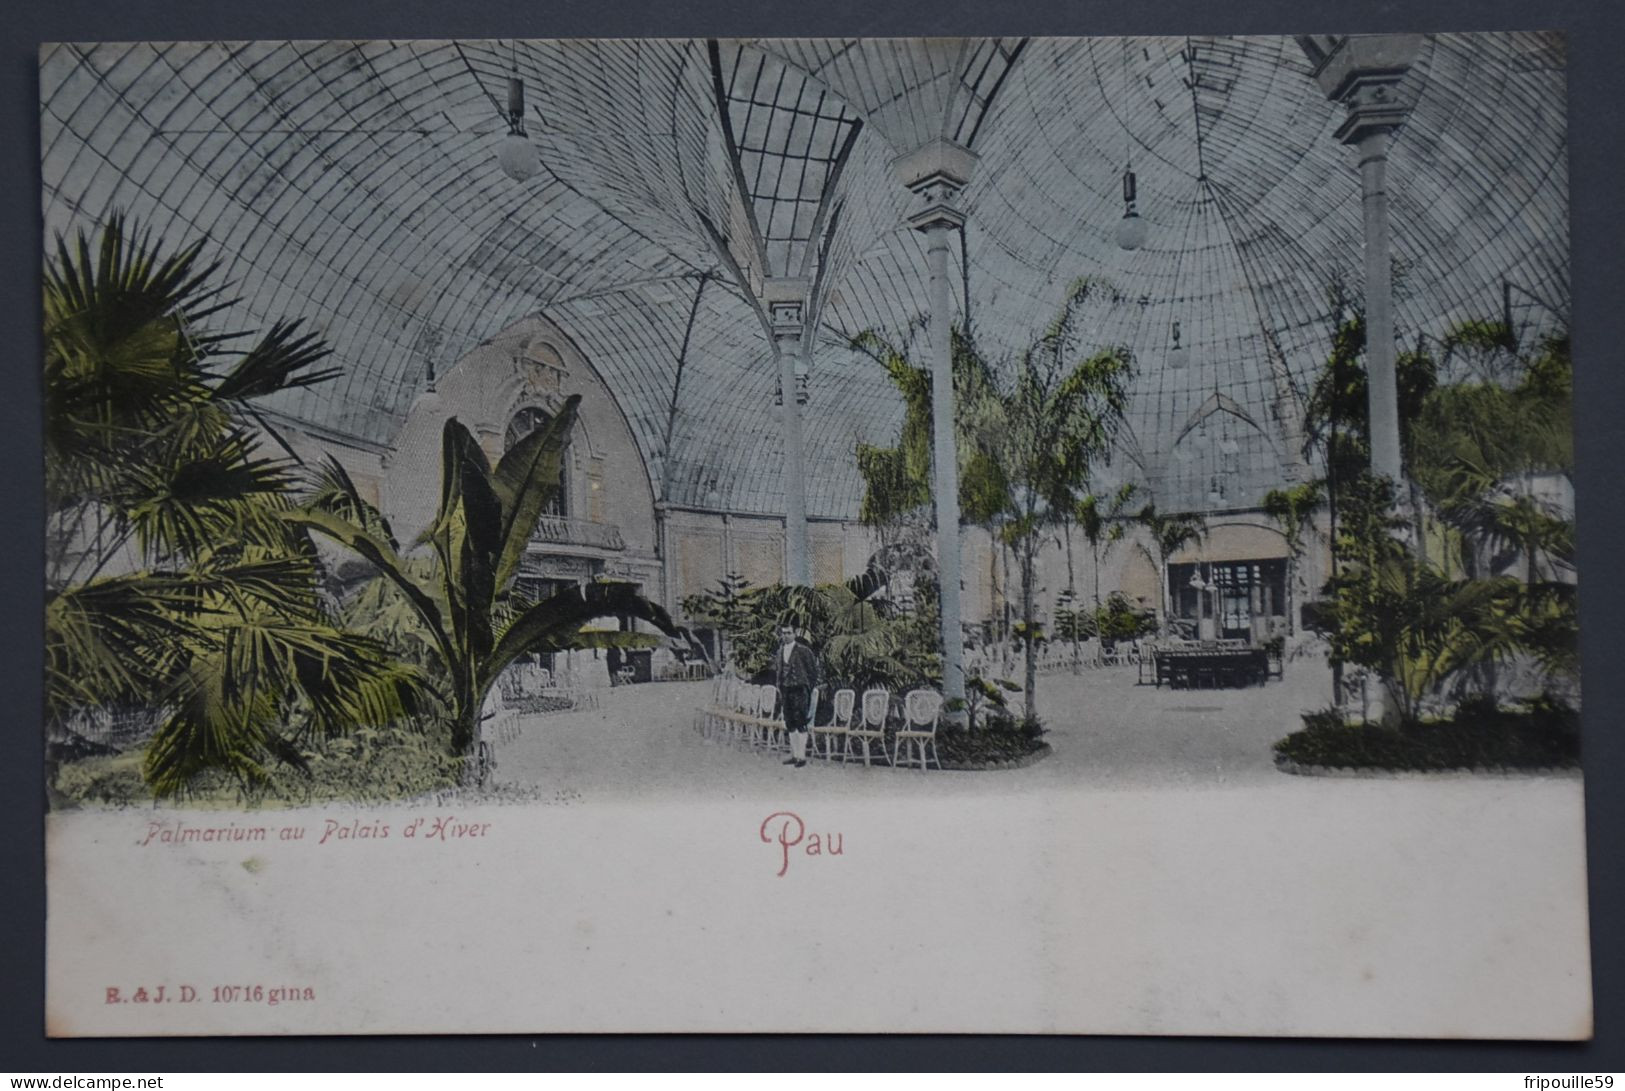 Pau - Palmarium Au Palais D'Hiver - R. & J.D. 10716 Gina - 1900 !! - Pau